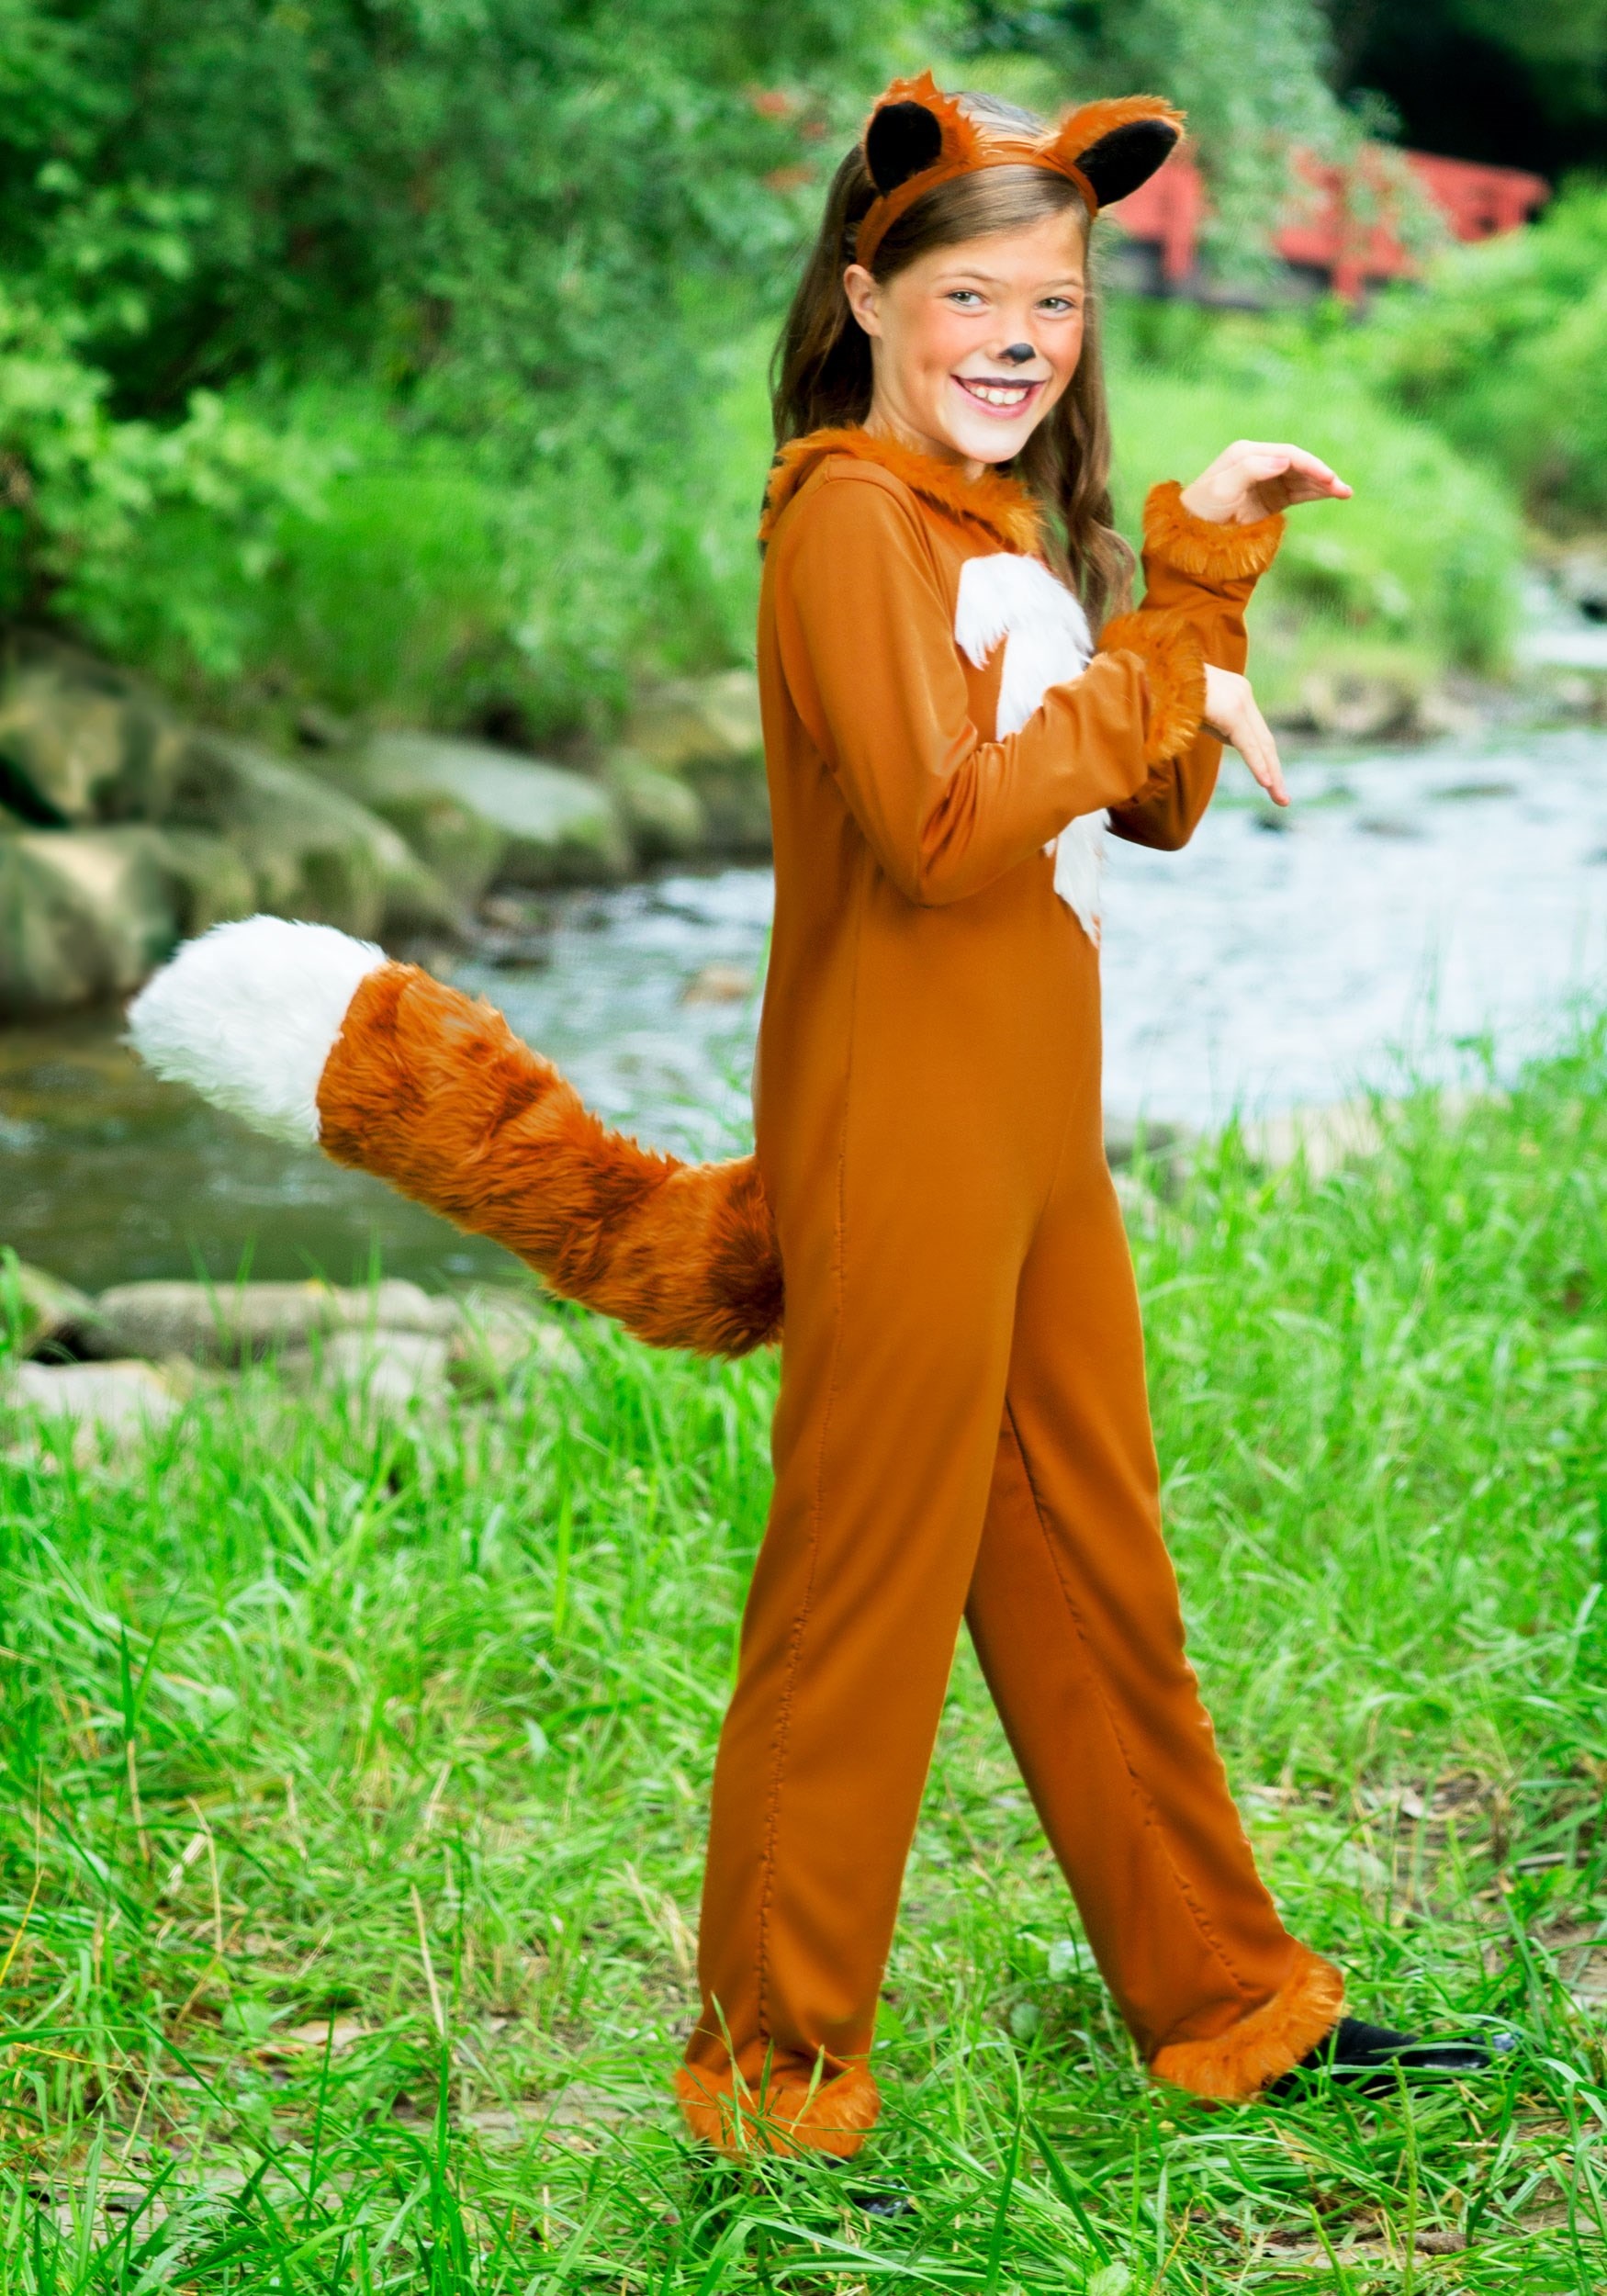 Girl's Sly Fox Costume.